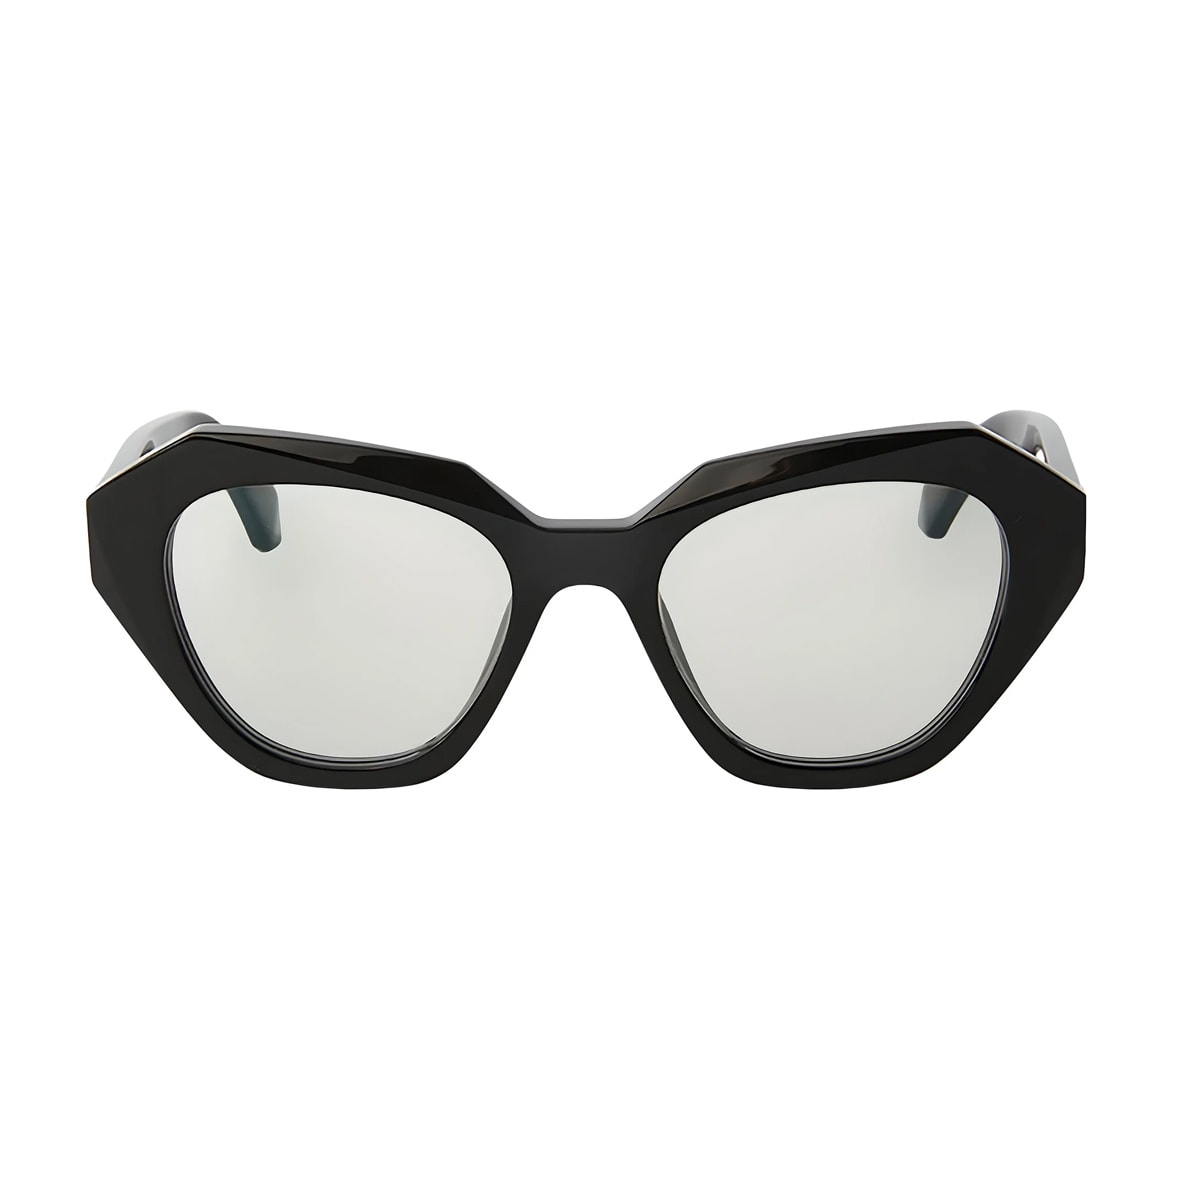 Off White Oerj074 Style 74 1000 Black Glasses